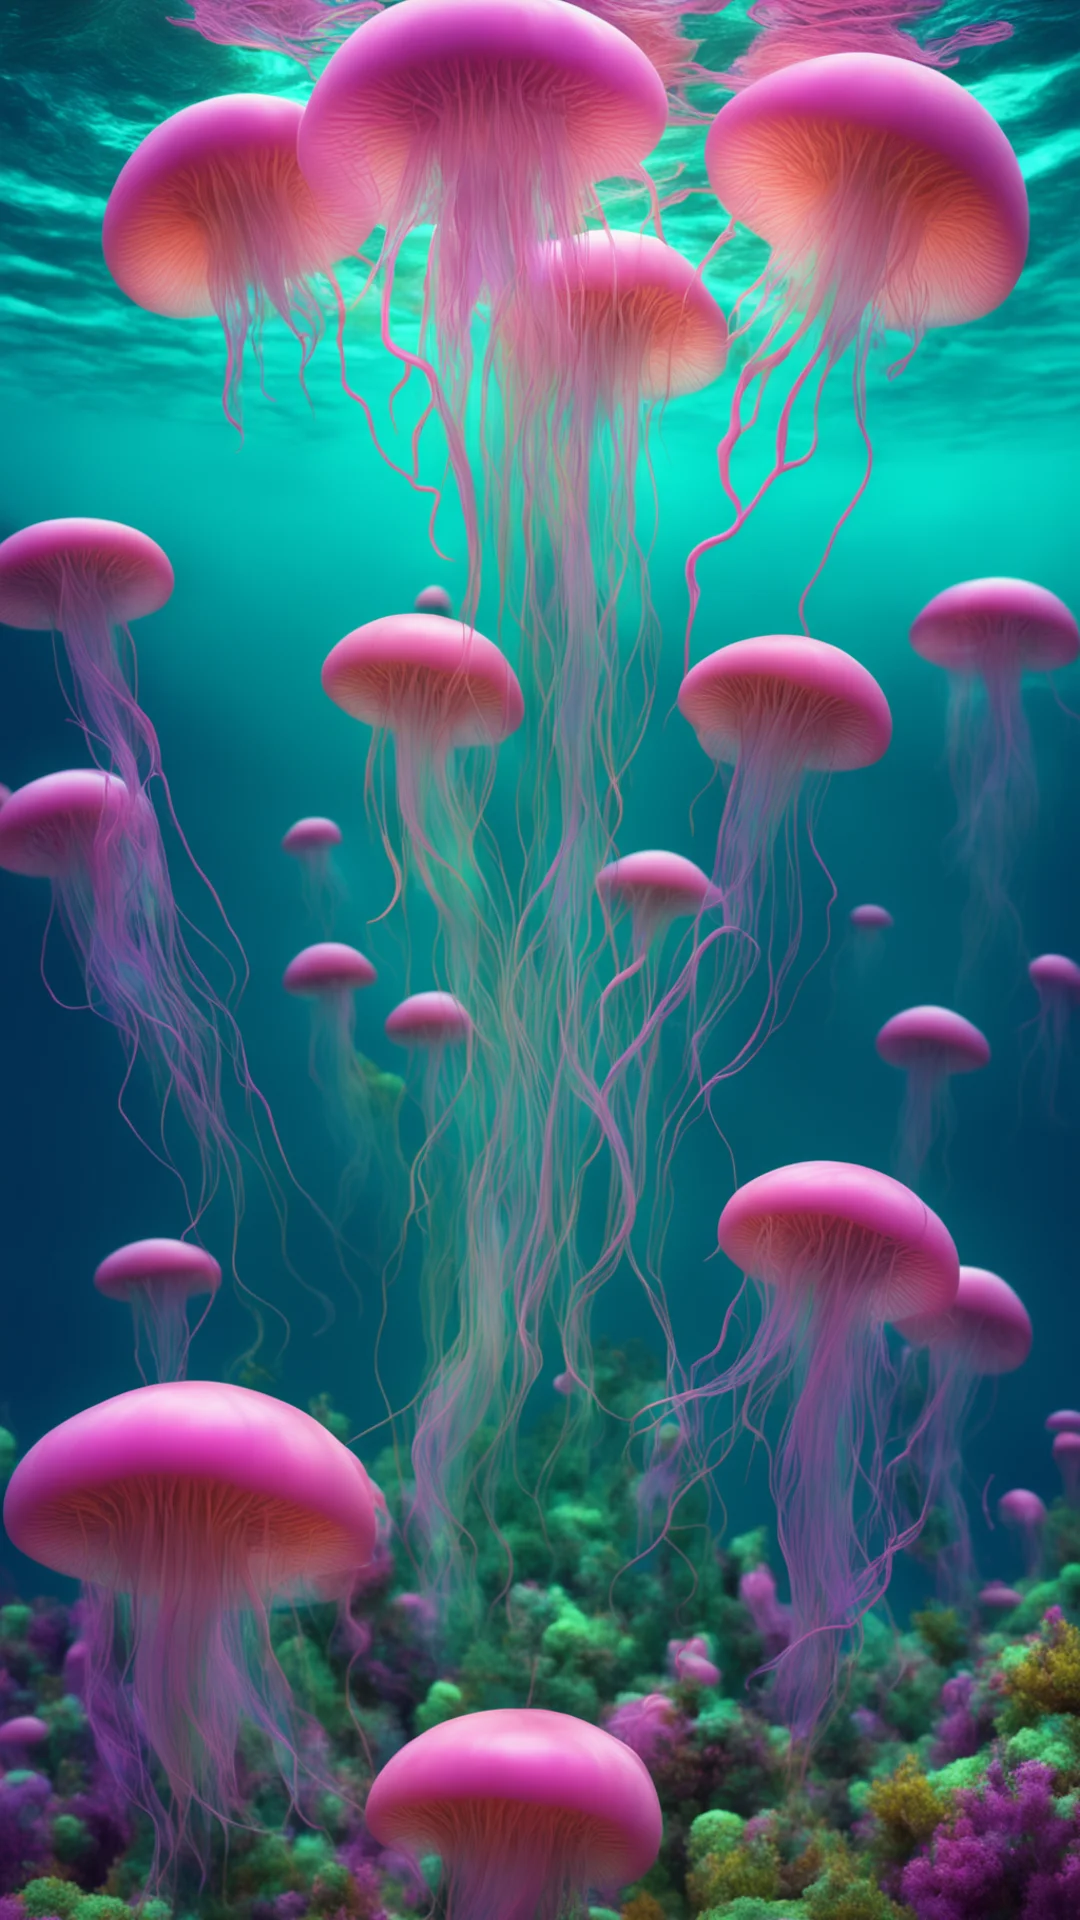 aitrending underwater full of strange jellyfish colorful cgi 3d surreal good looking fantastic 1 tall